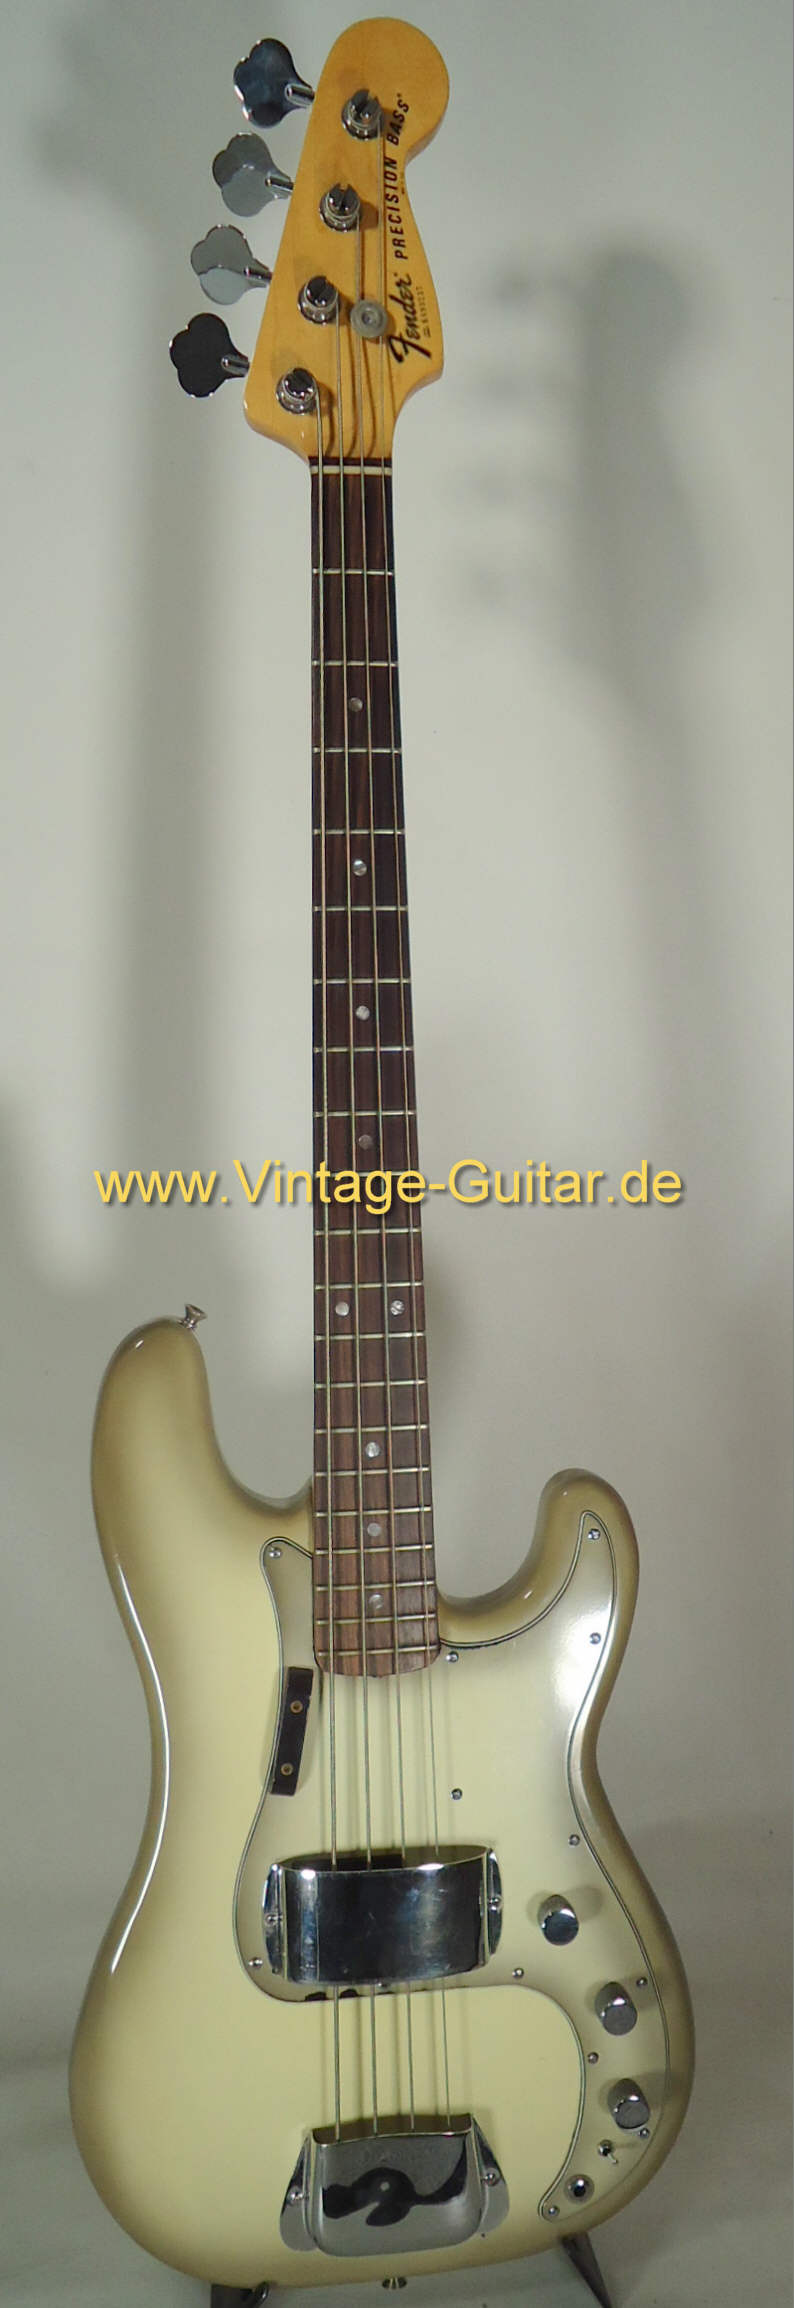 Fender Precision Bass 1978 antigua a.jpg